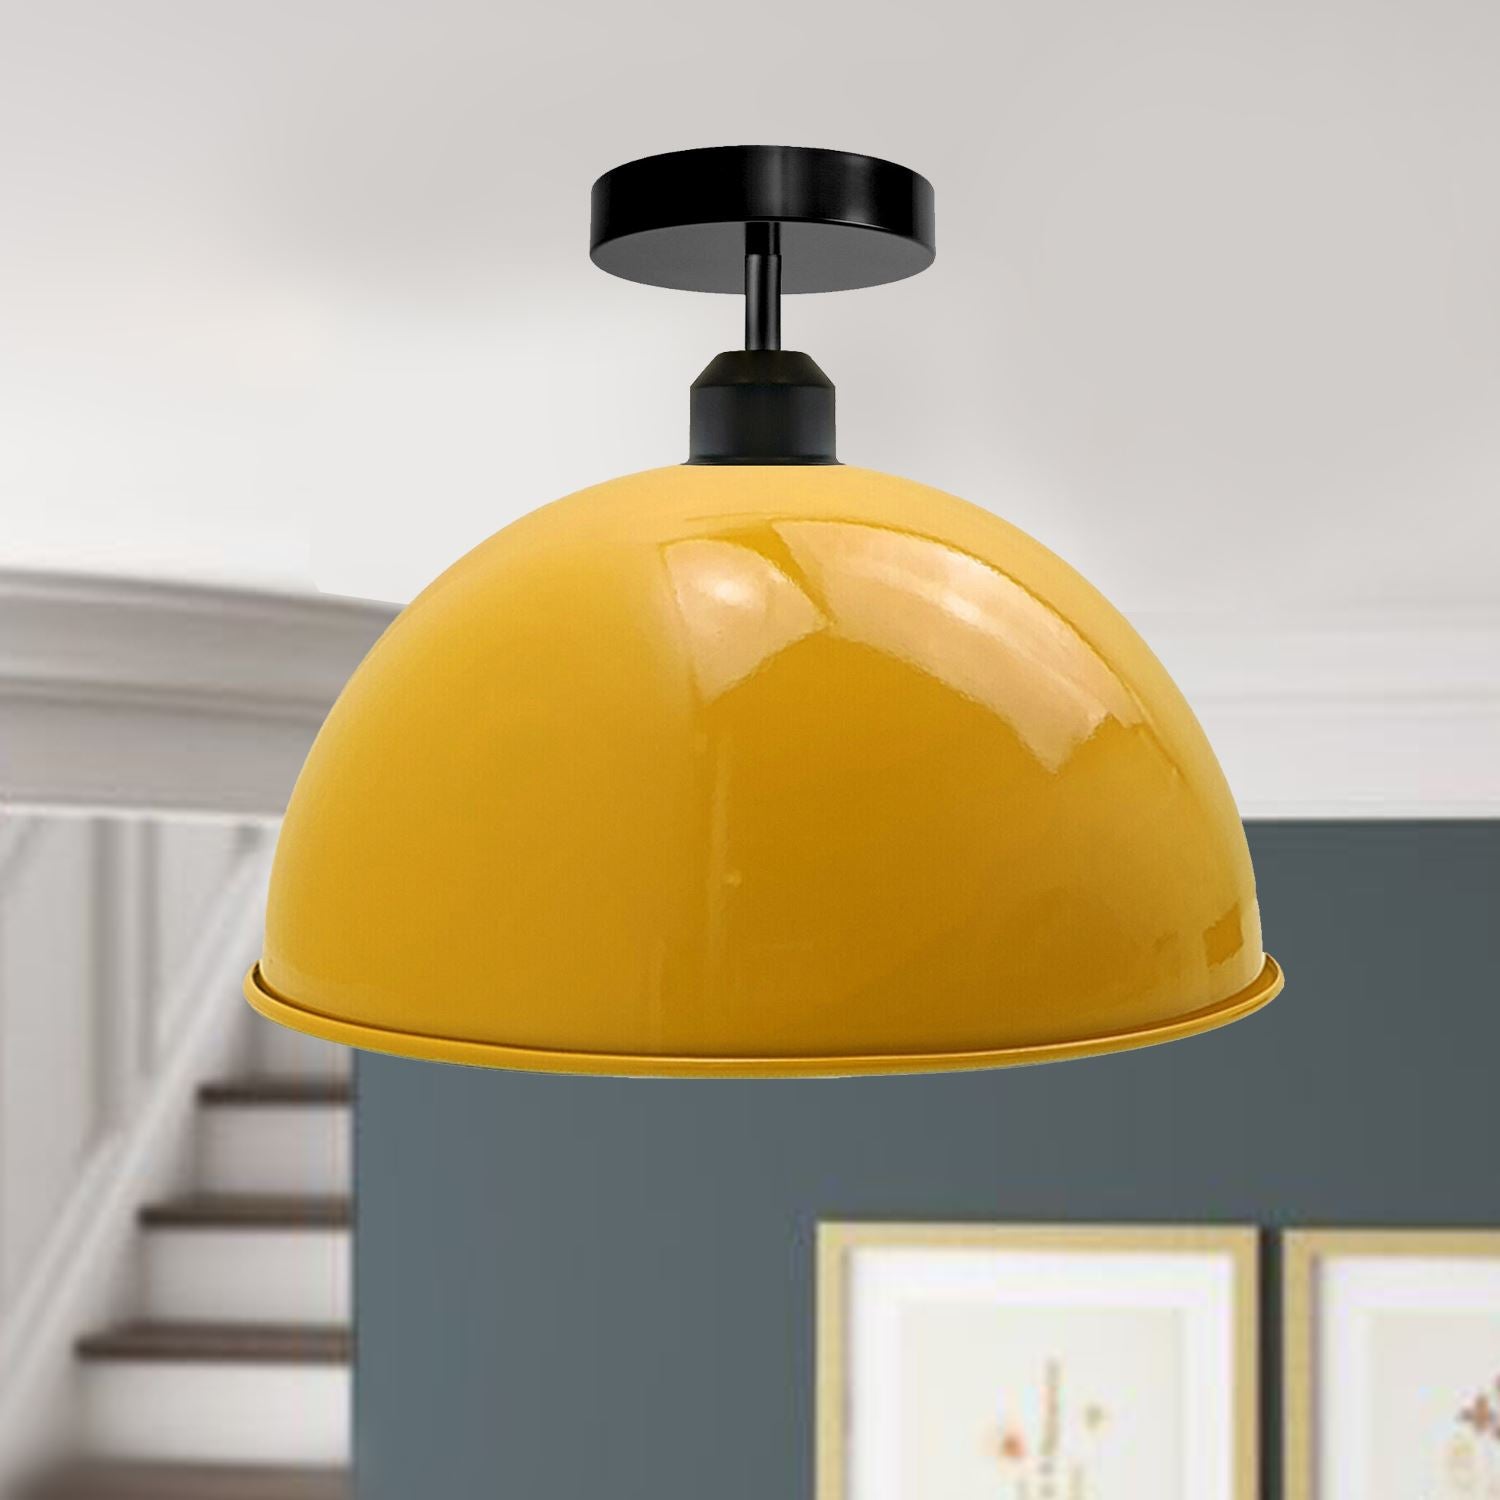 Illuminate Industrial Vintage Dome Style Shade Light Fixtures